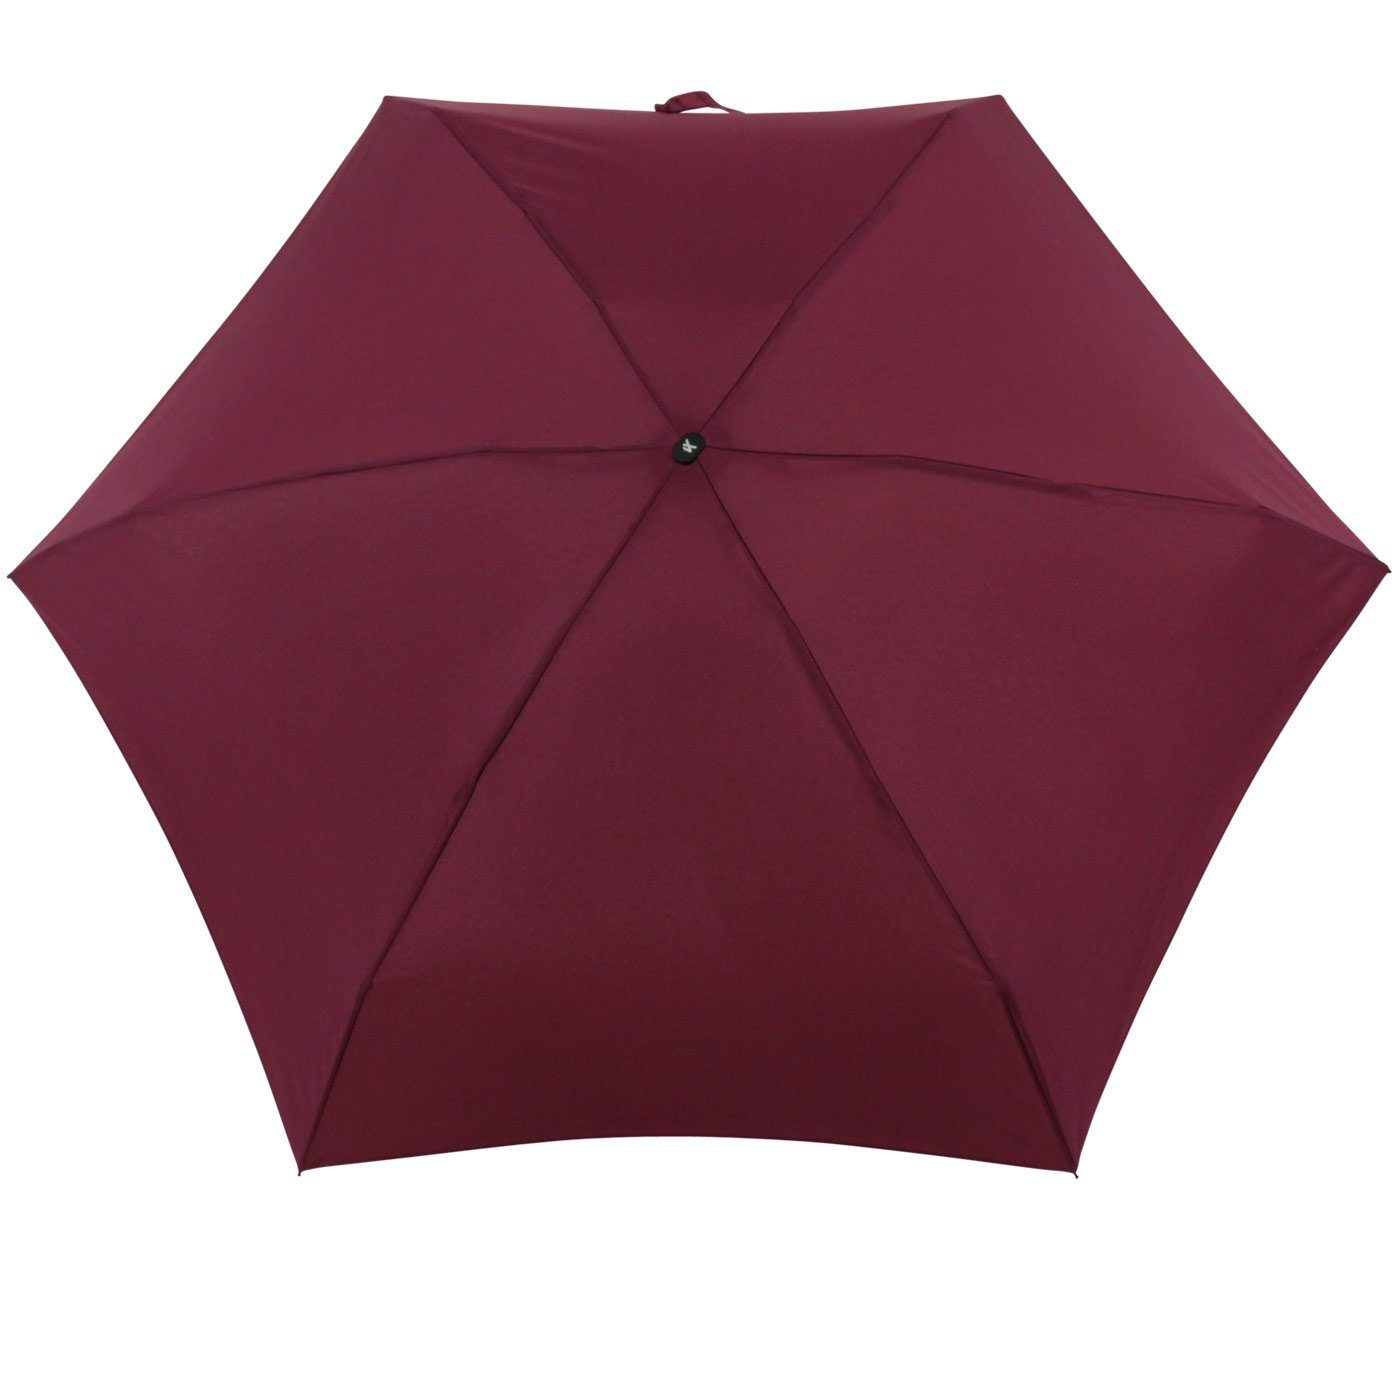 Mini mit cm großem, Taschenregenschirm iX-brella Schirm Super bordeaux kleiner 94cm 18 super-mini